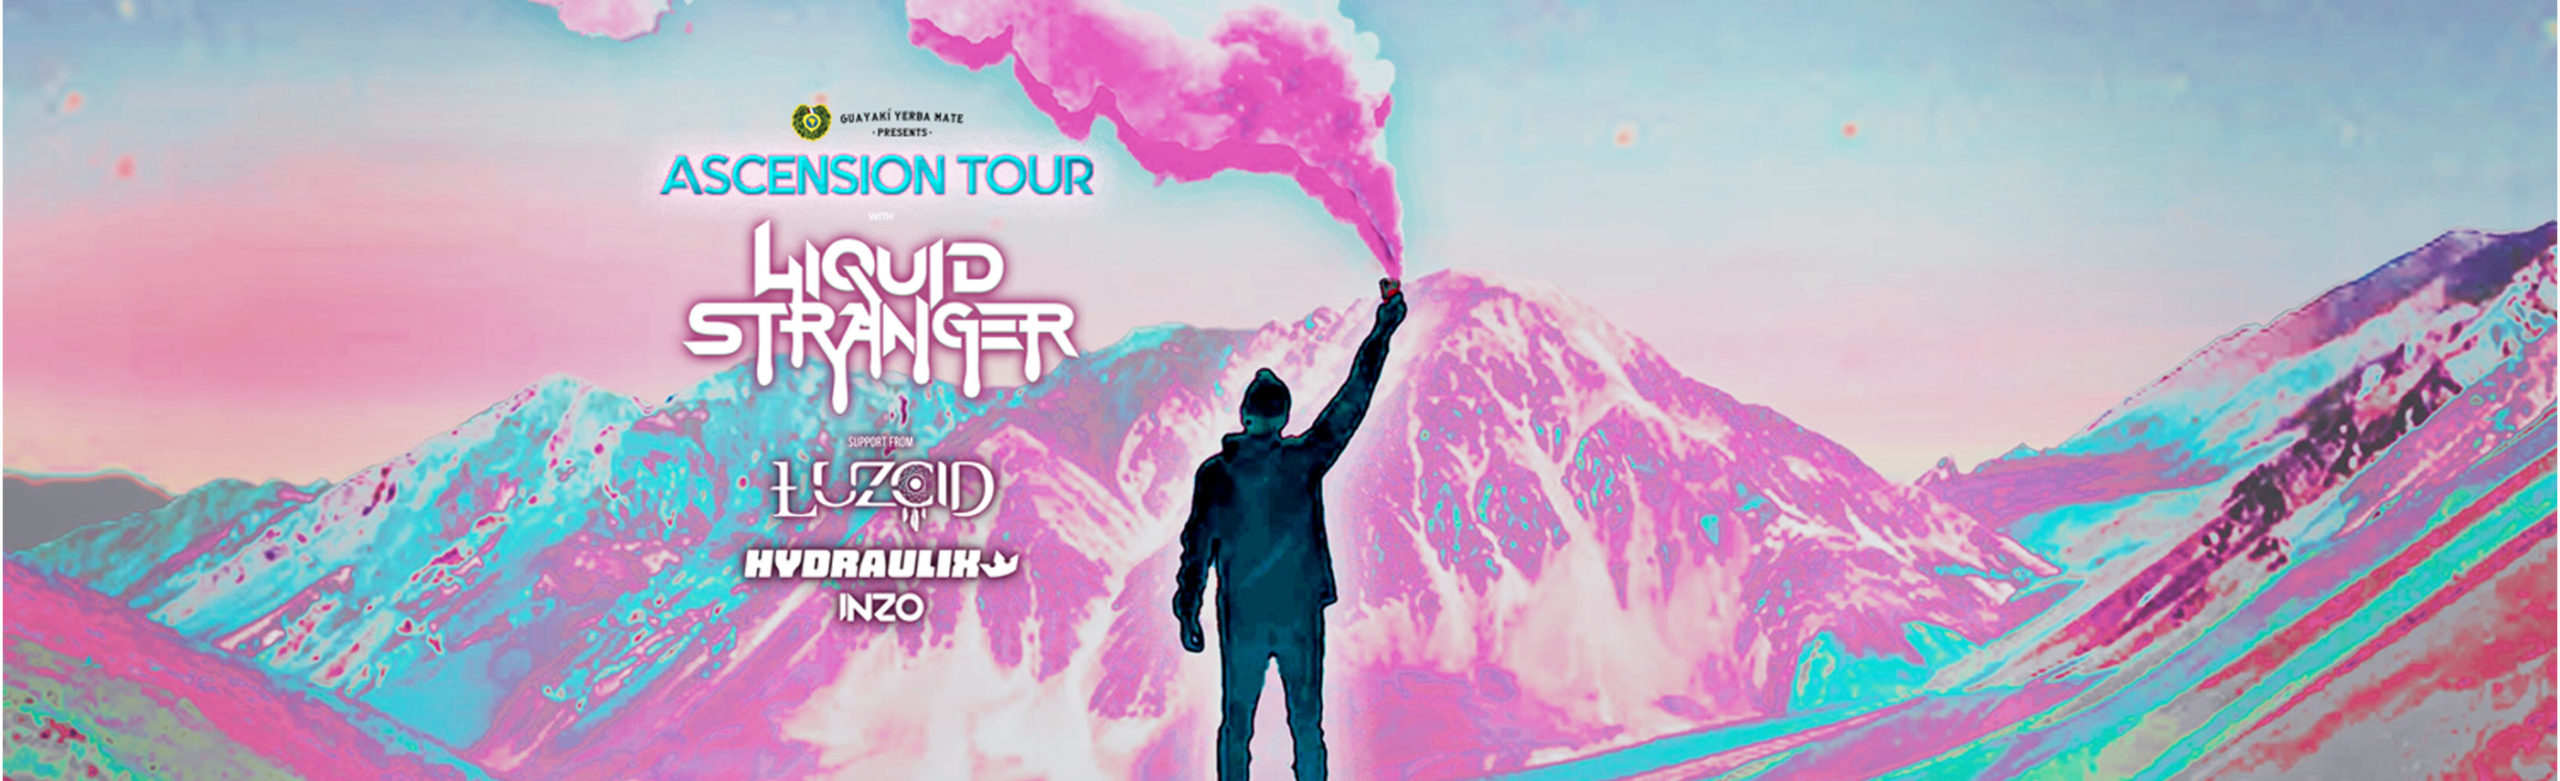 Liquid Stranger Announces Ascension Tour Including Two Montana Shows Image